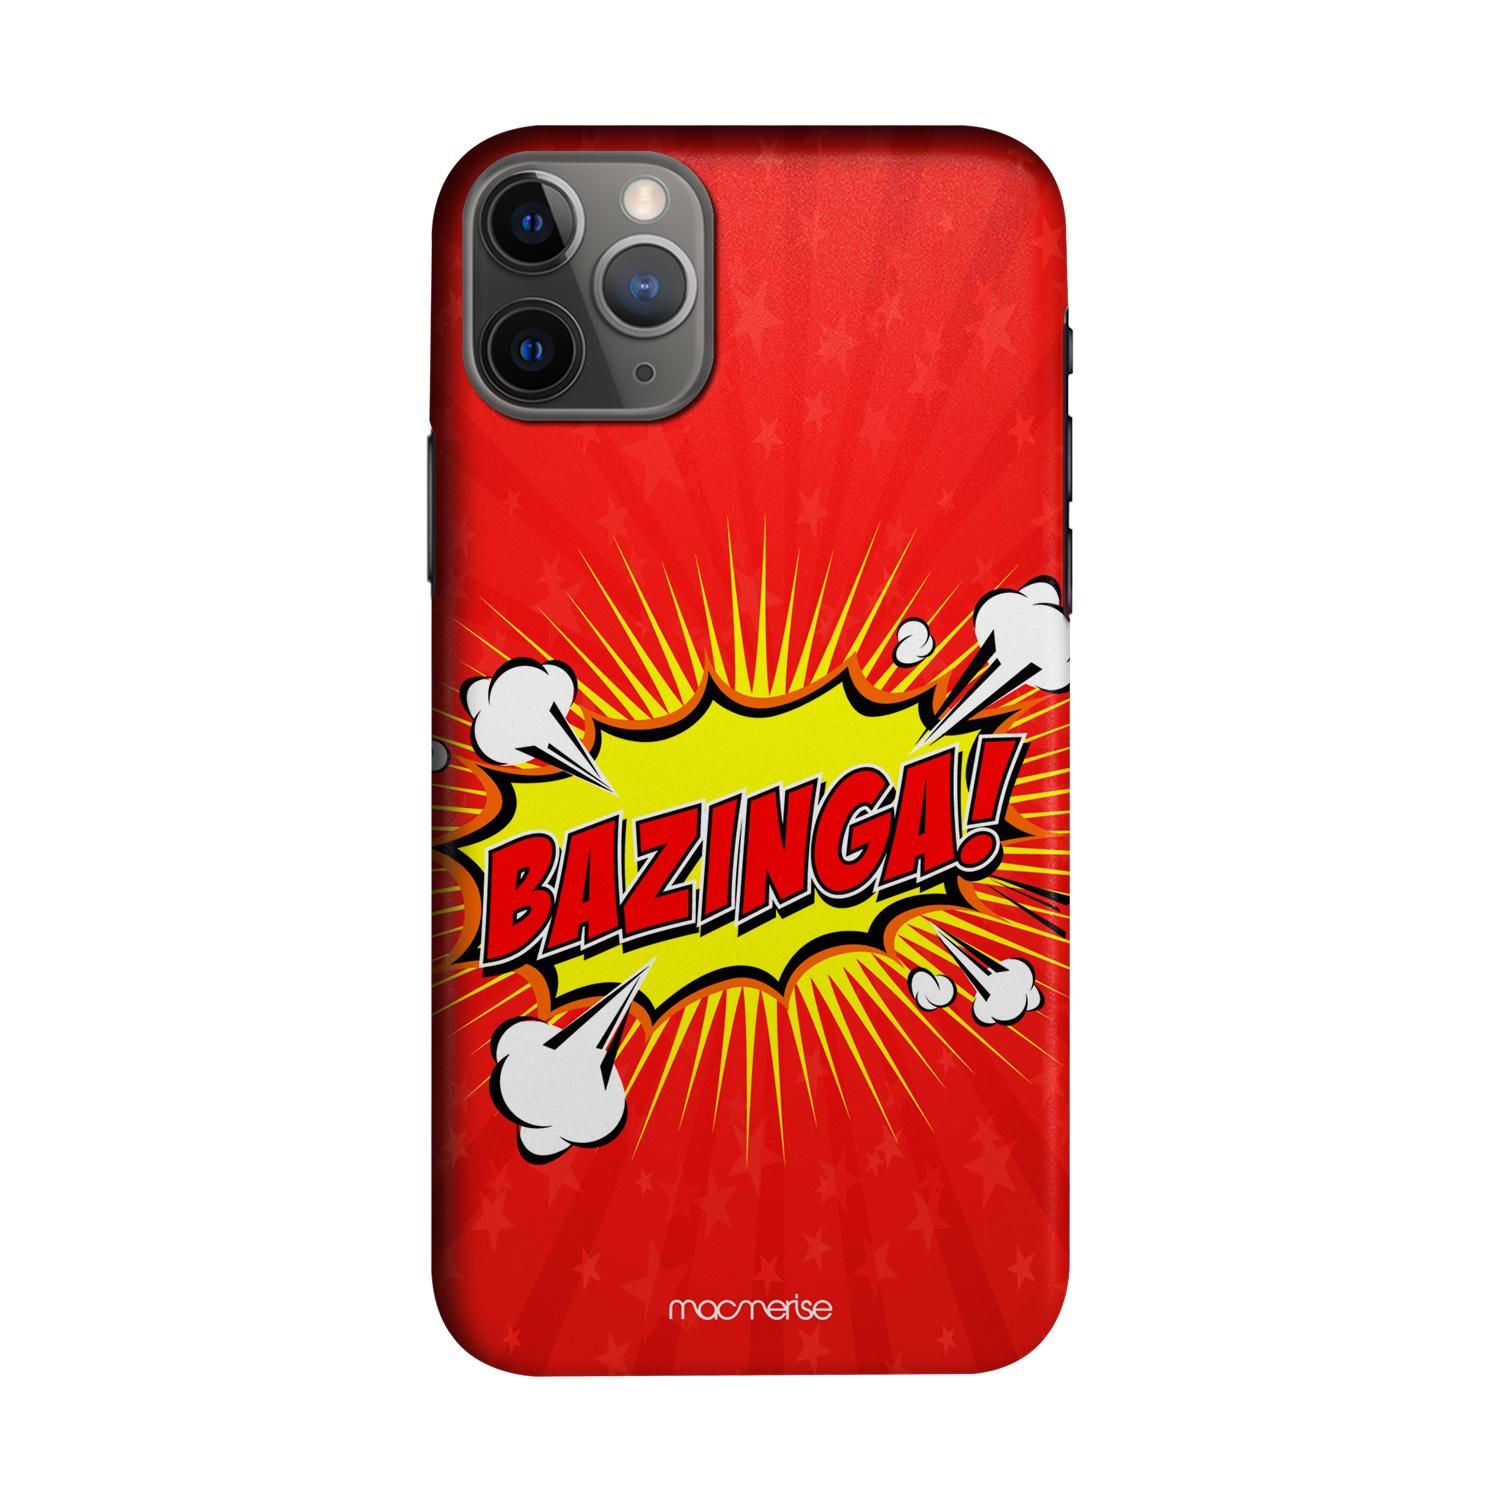 Buy Bazinga - Sleek Phone Case for iPhone 11 Pro Max Online